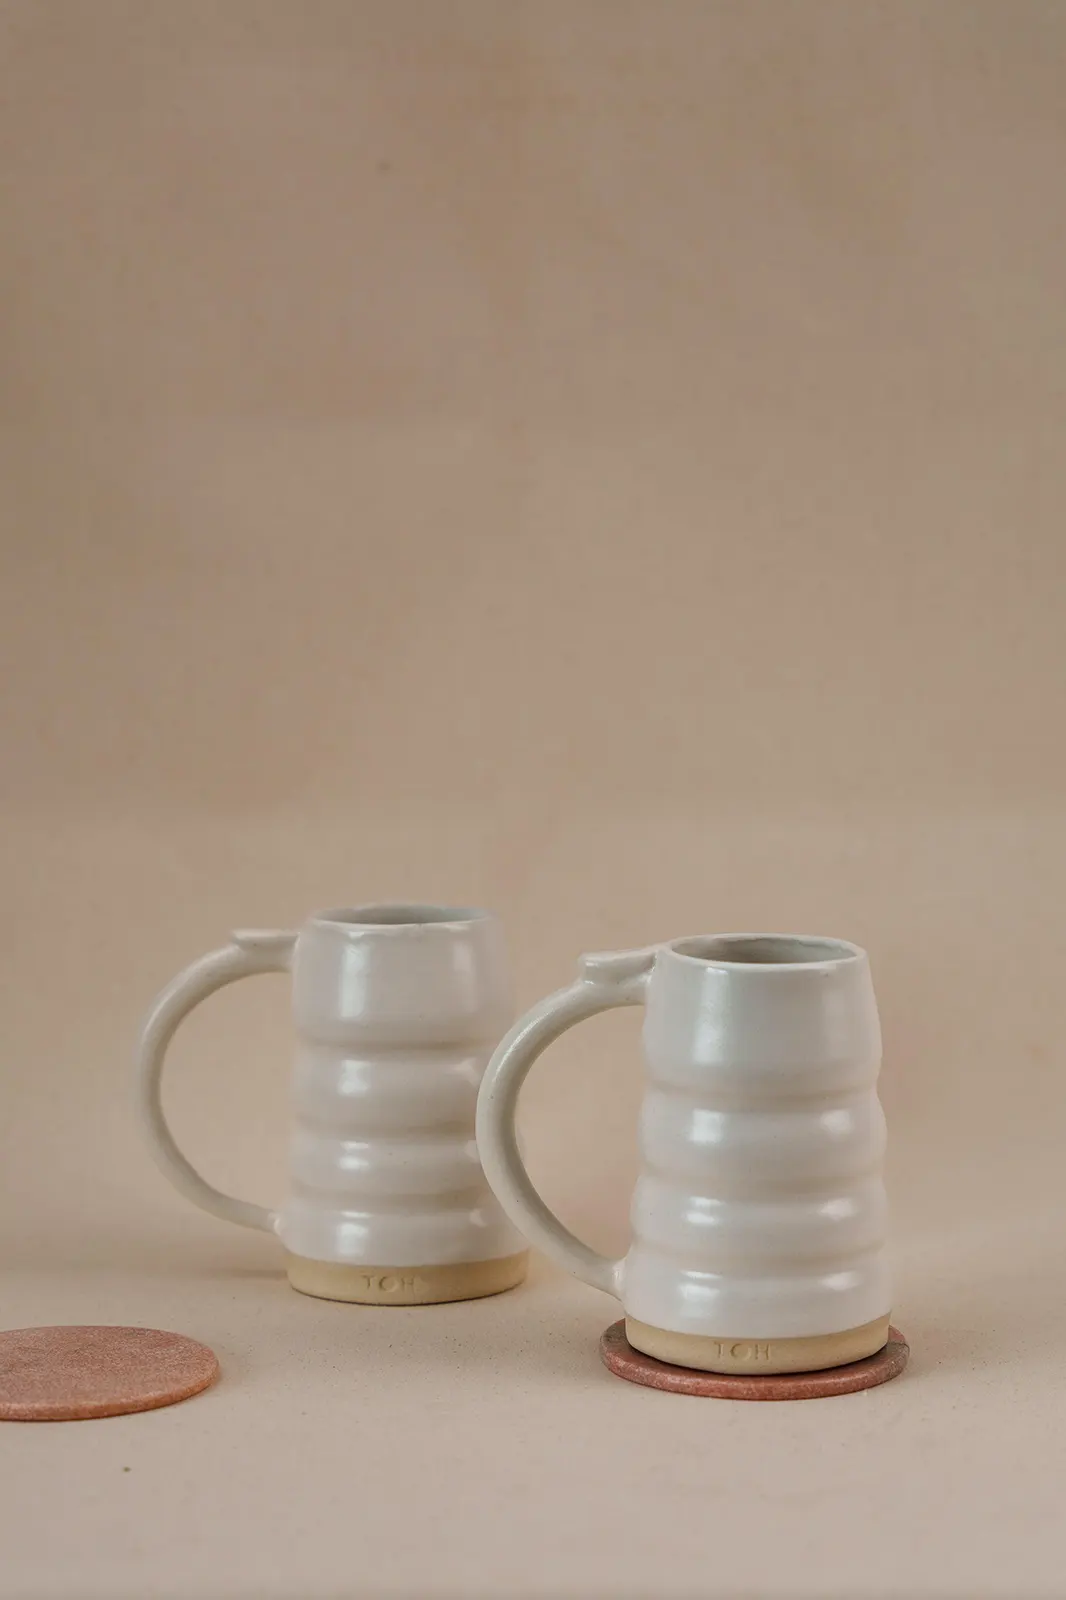 Set of 2 spiral pottery ceramic beer mug matte white, milk pitcher, tea pitcher, coffee mug, coffee mug set of 4, ceramic mug, ceramic beer mug, ceramic milk pitcher, online coffee mug, ceramic mug handmade, ceramic mug online, ceramic mug sets, ceramic coffee mug handmade, coffee mugs, tea mug, coffee mugs online, ceramic mugs, coffee ceramic mugs, handmade ceramic mugs, handmade mugs, coffee mug set, tea mug set, beer mugs glass, Toh, Sepia stories